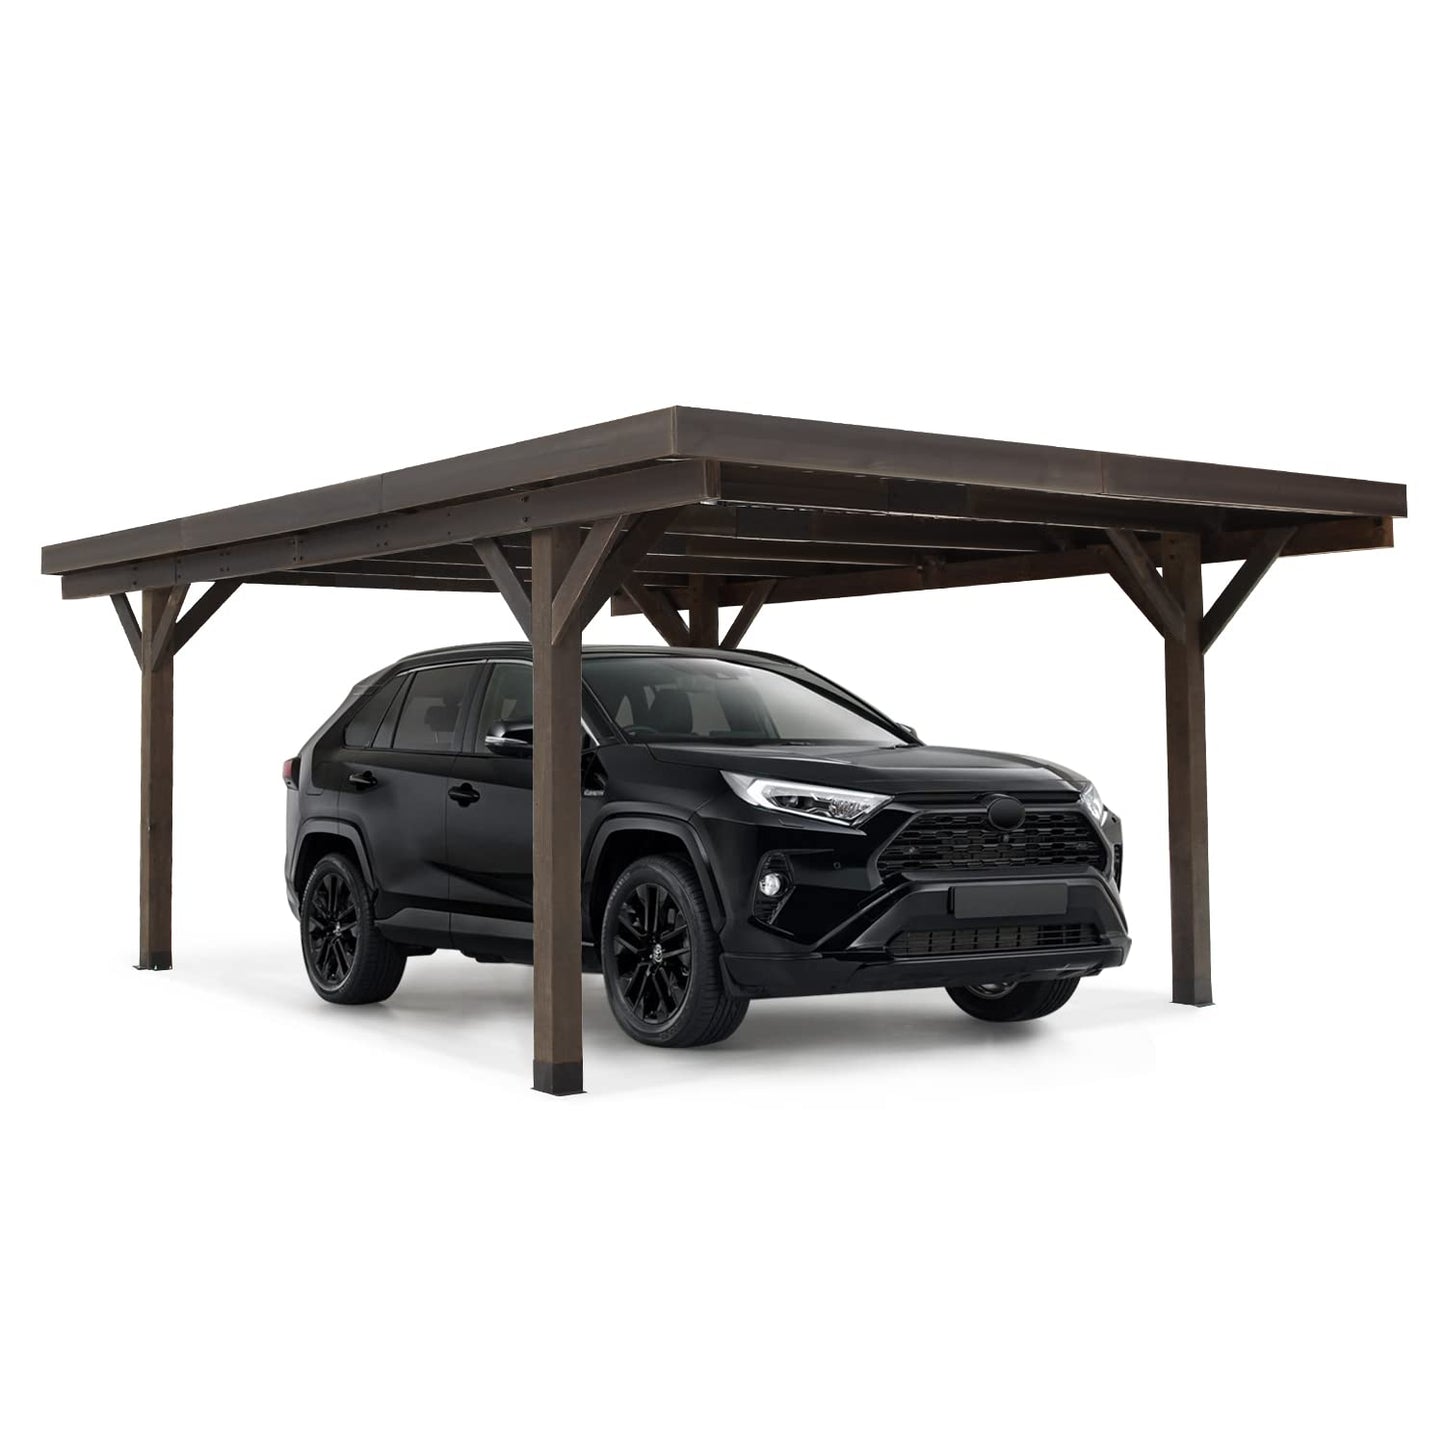 U-MAX 17x12ft Wooden Carport Garage Outdoor Gazebo Wooden Pergola for Backyard, Coffee